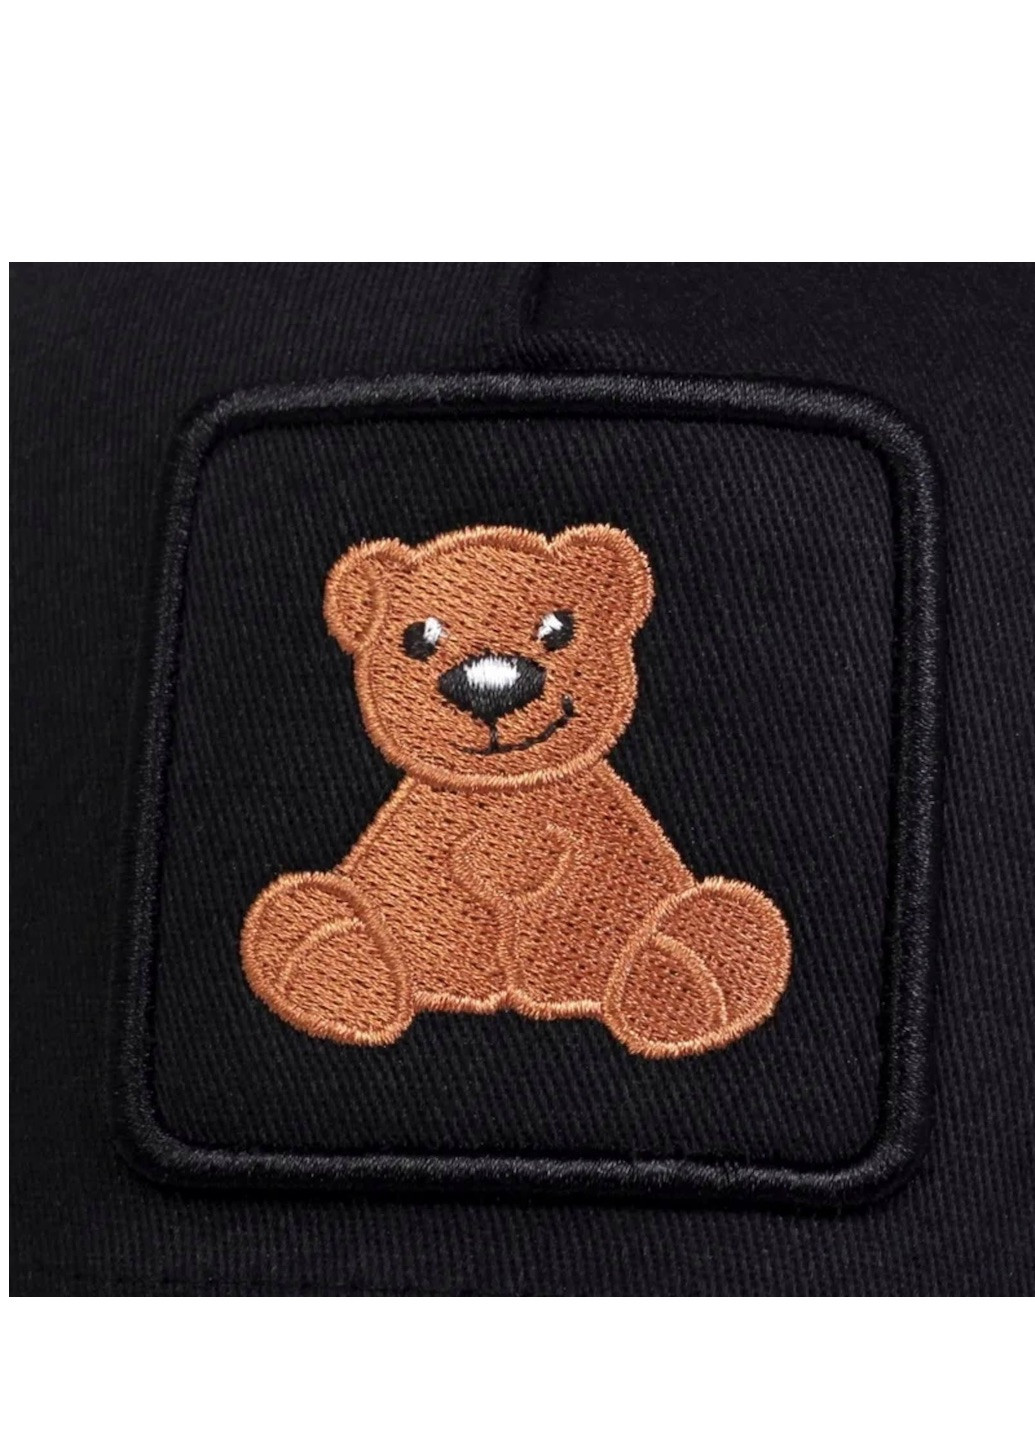 Кепка Мишка Тедди Teddy Bear медведь с сеточкой Унисекс One size Brand тракер (259040661)